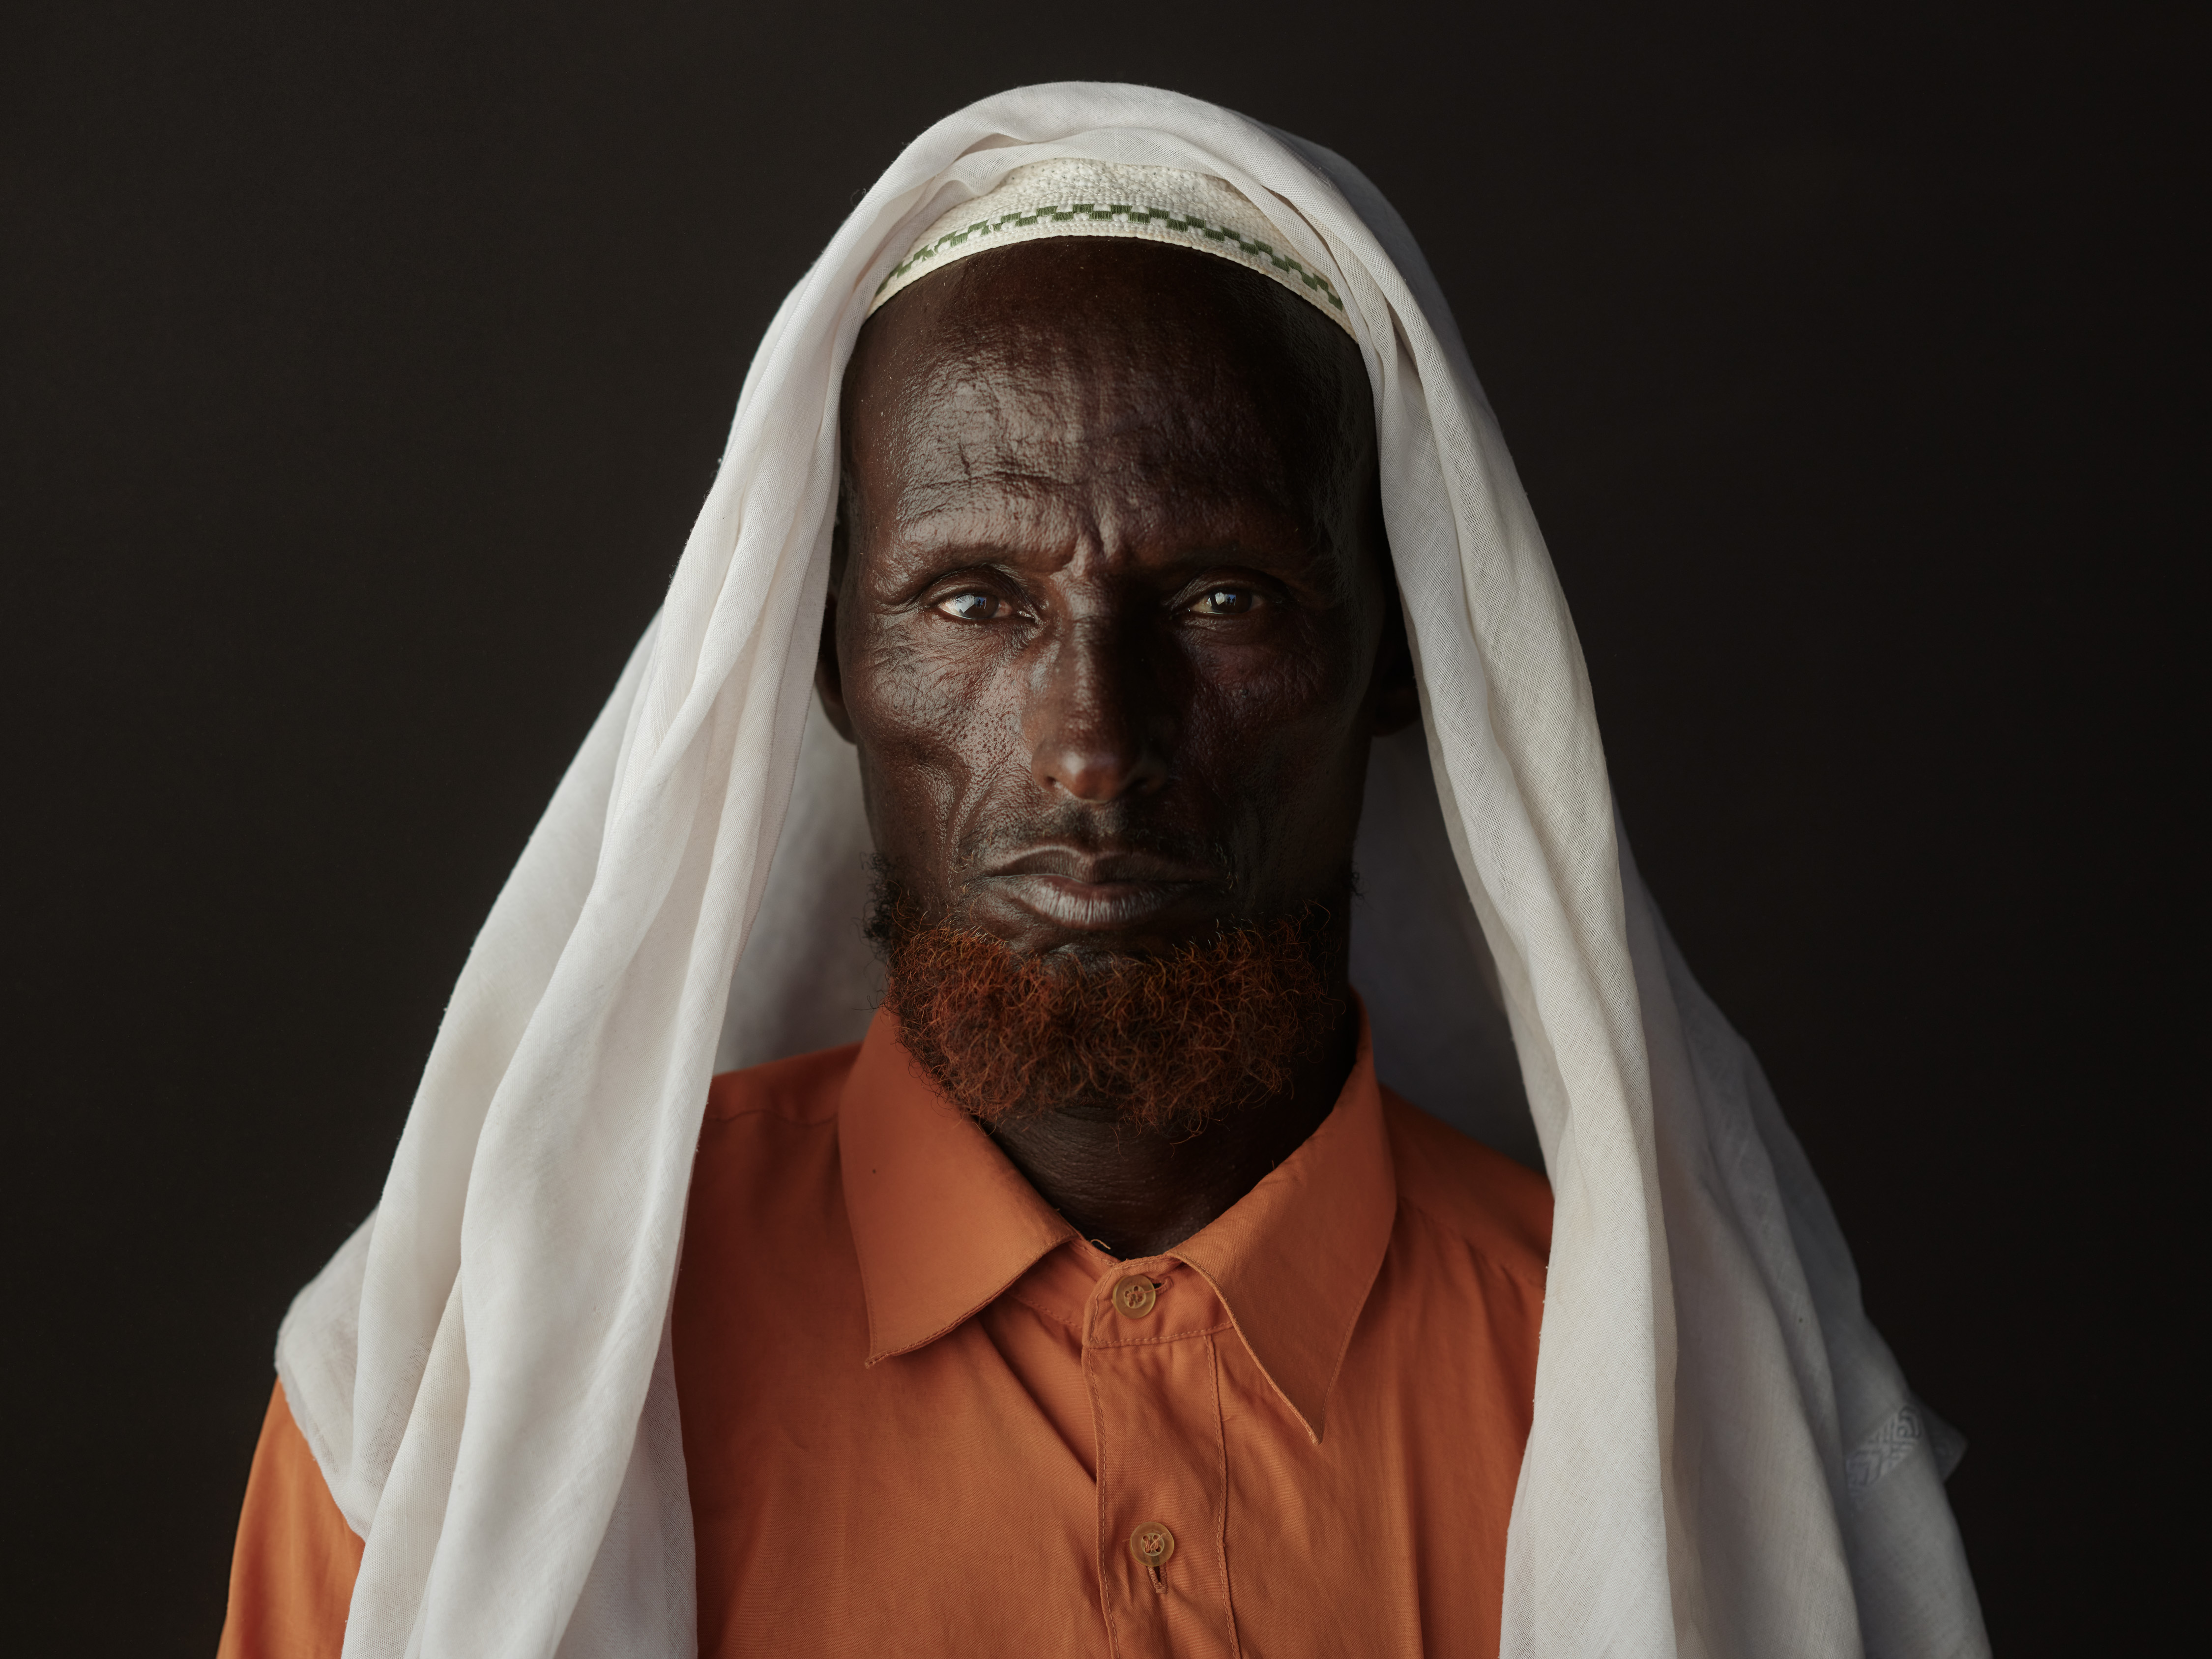 Ethiopia - Portraits - Portrait of Mohamed